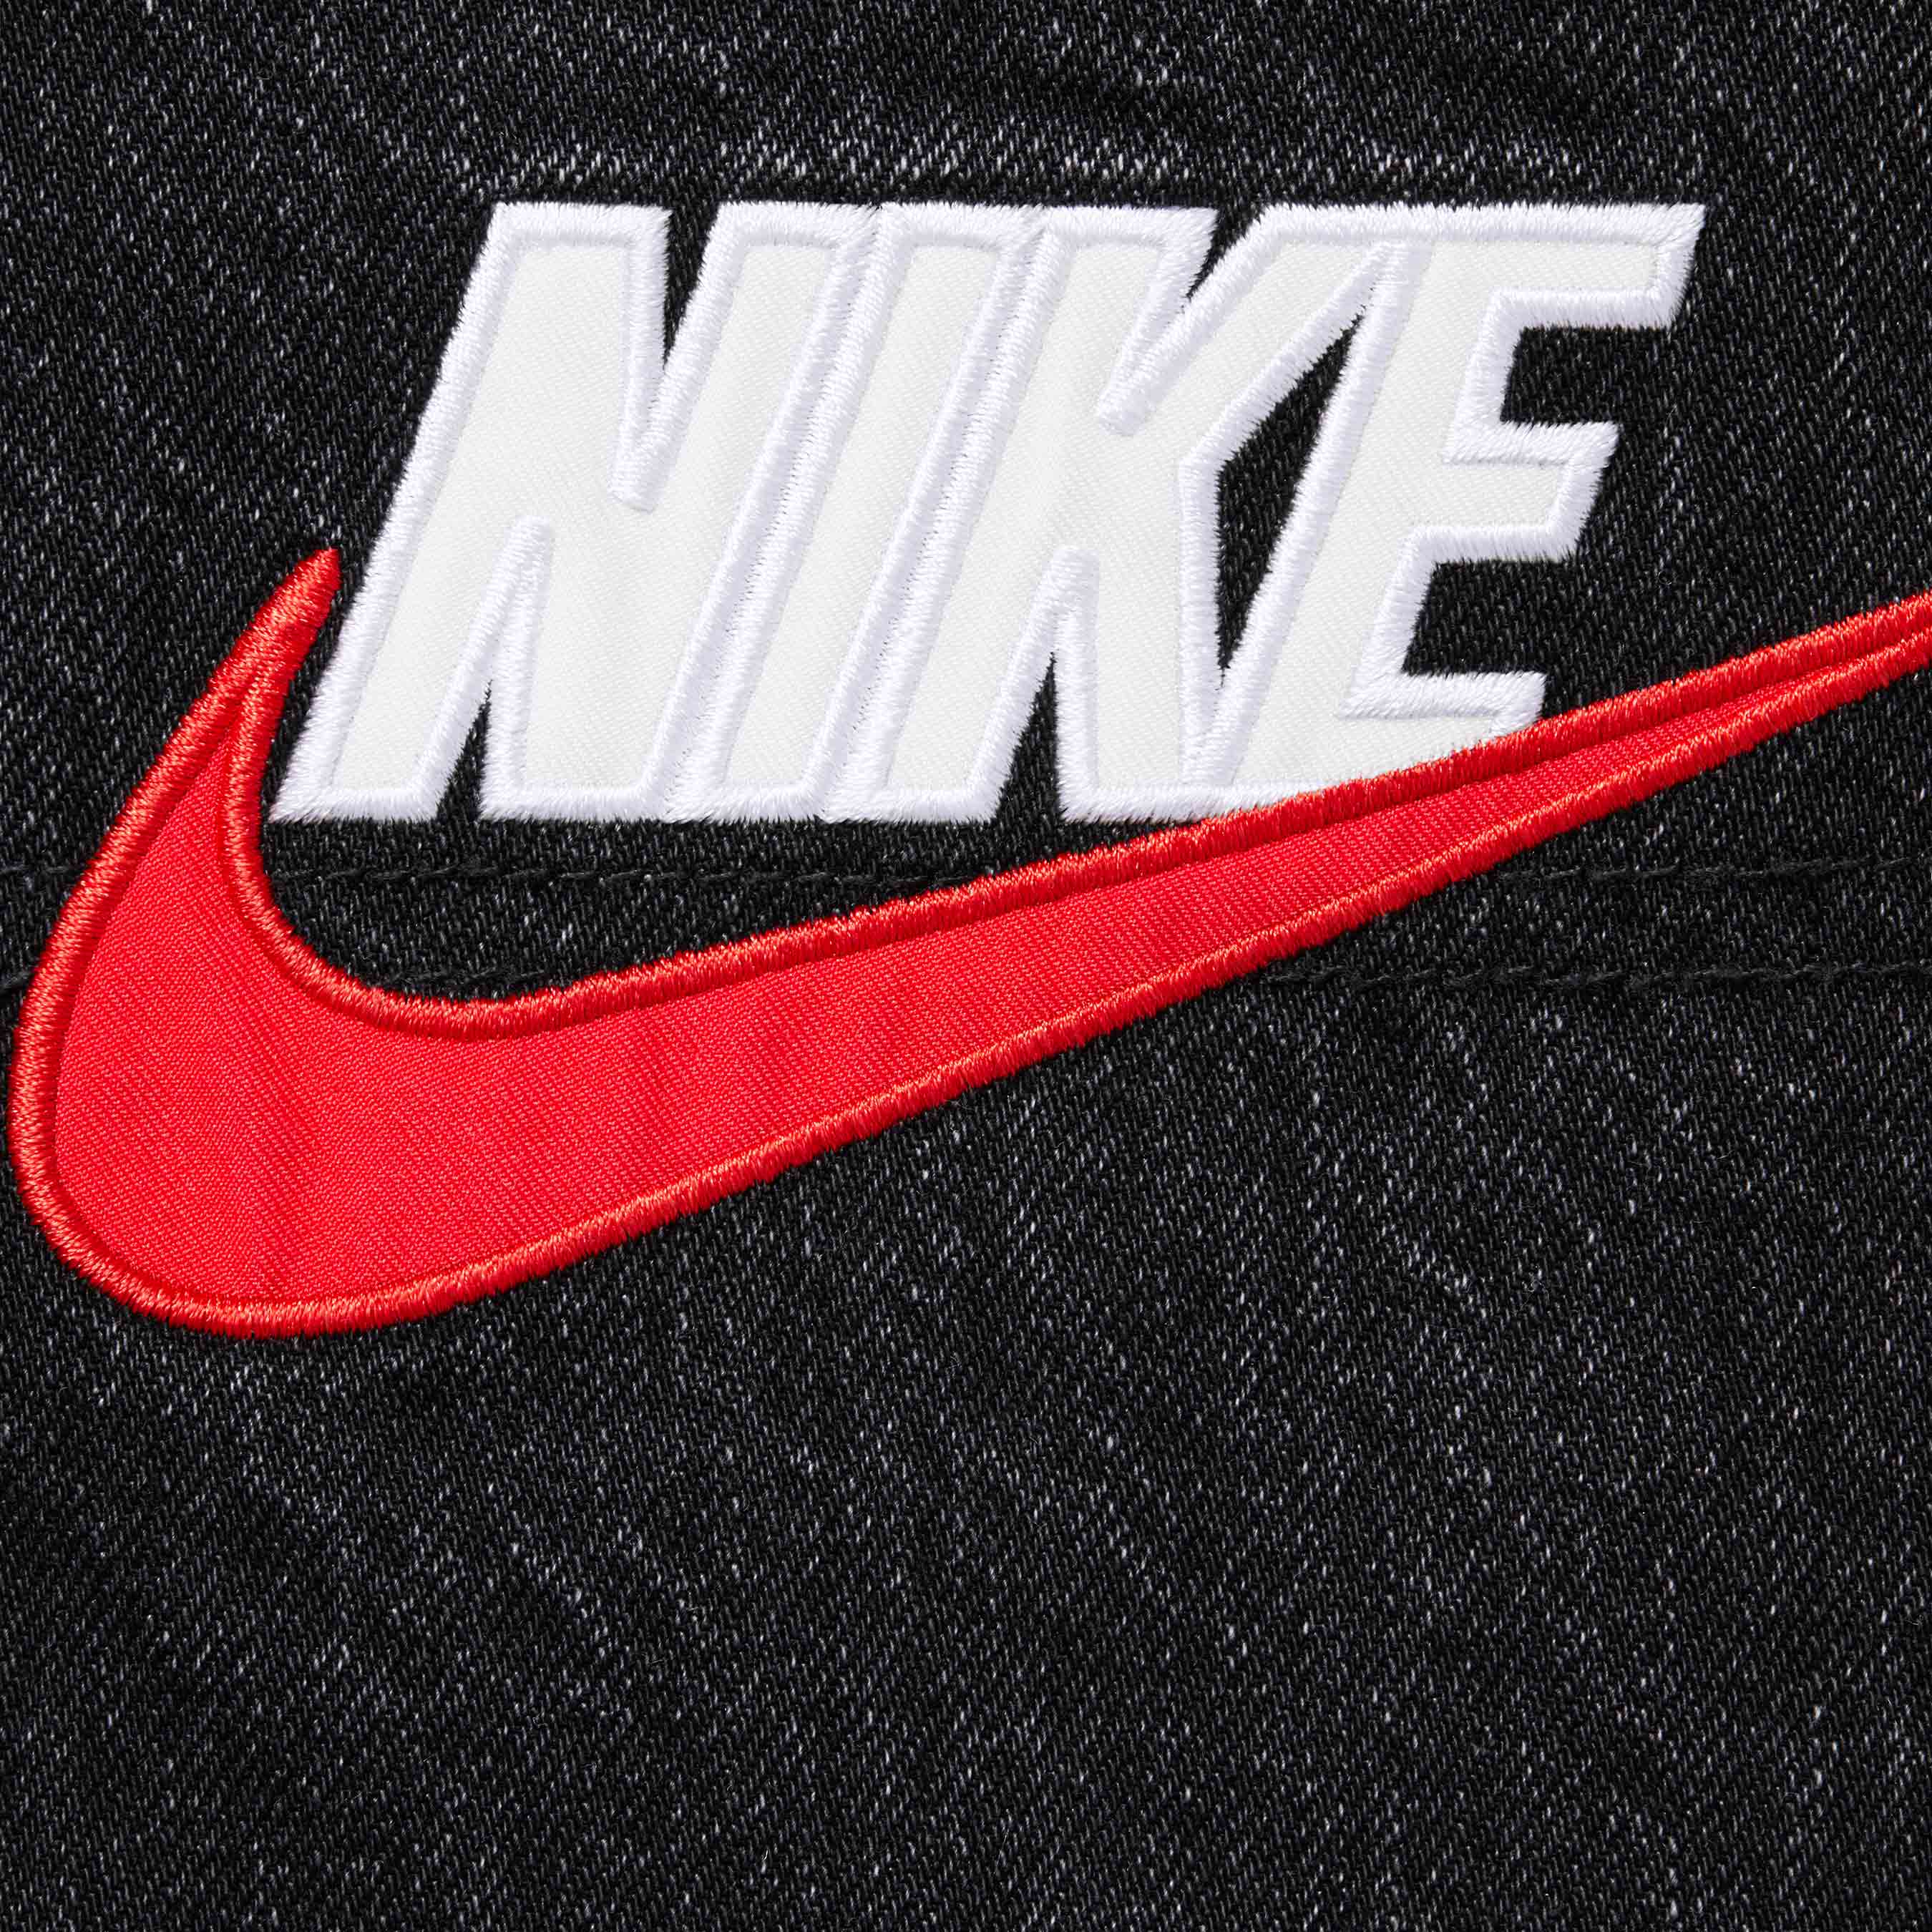 Supreme®/Nike® Denim Short - Shop - Supreme